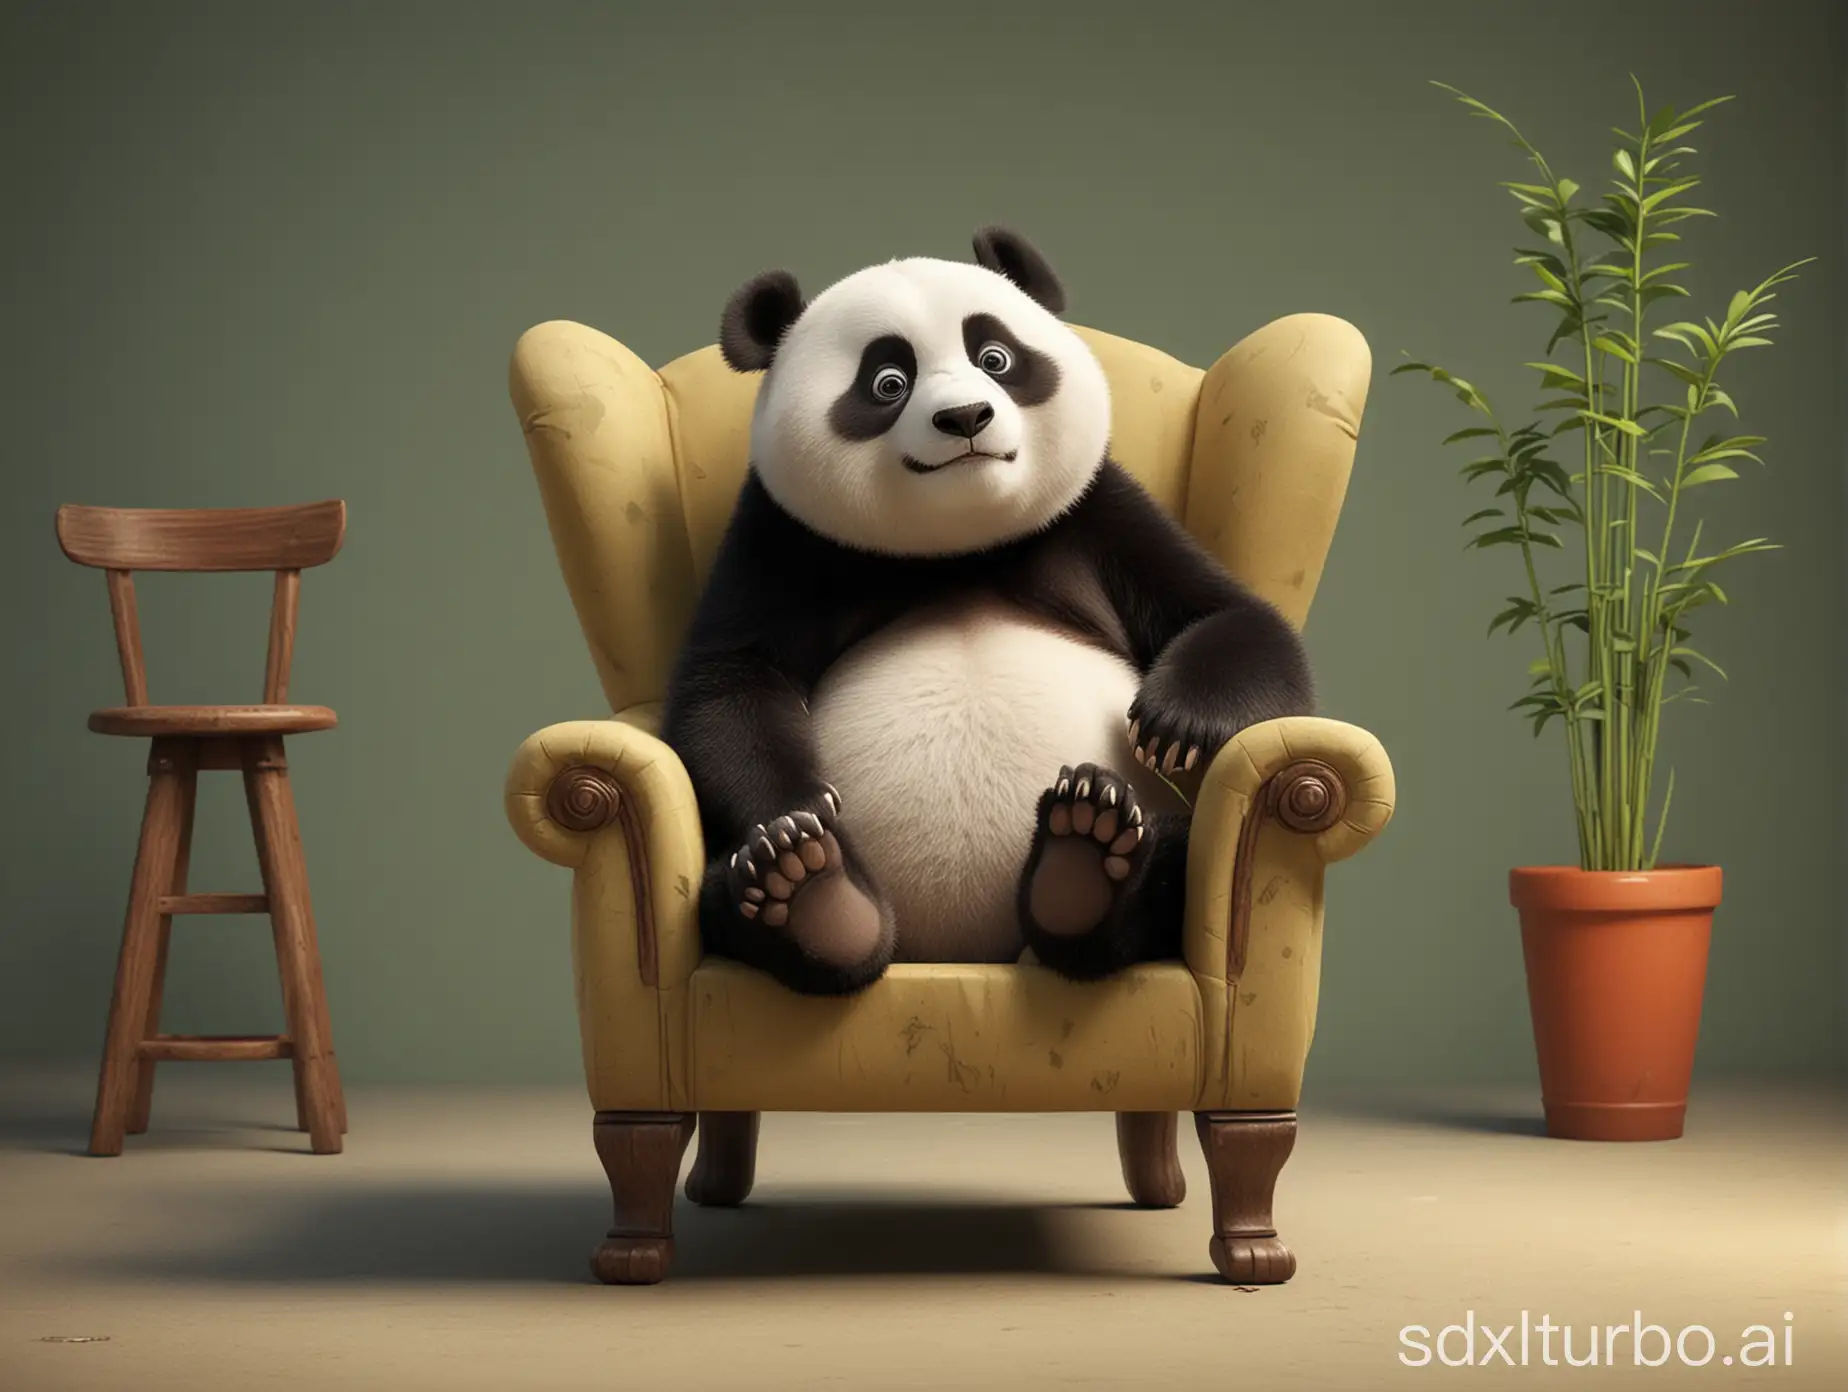 Anthropomorphism, a panda, sitting in a chair, holding his head, thinking, cute, cartoon, Pixar style